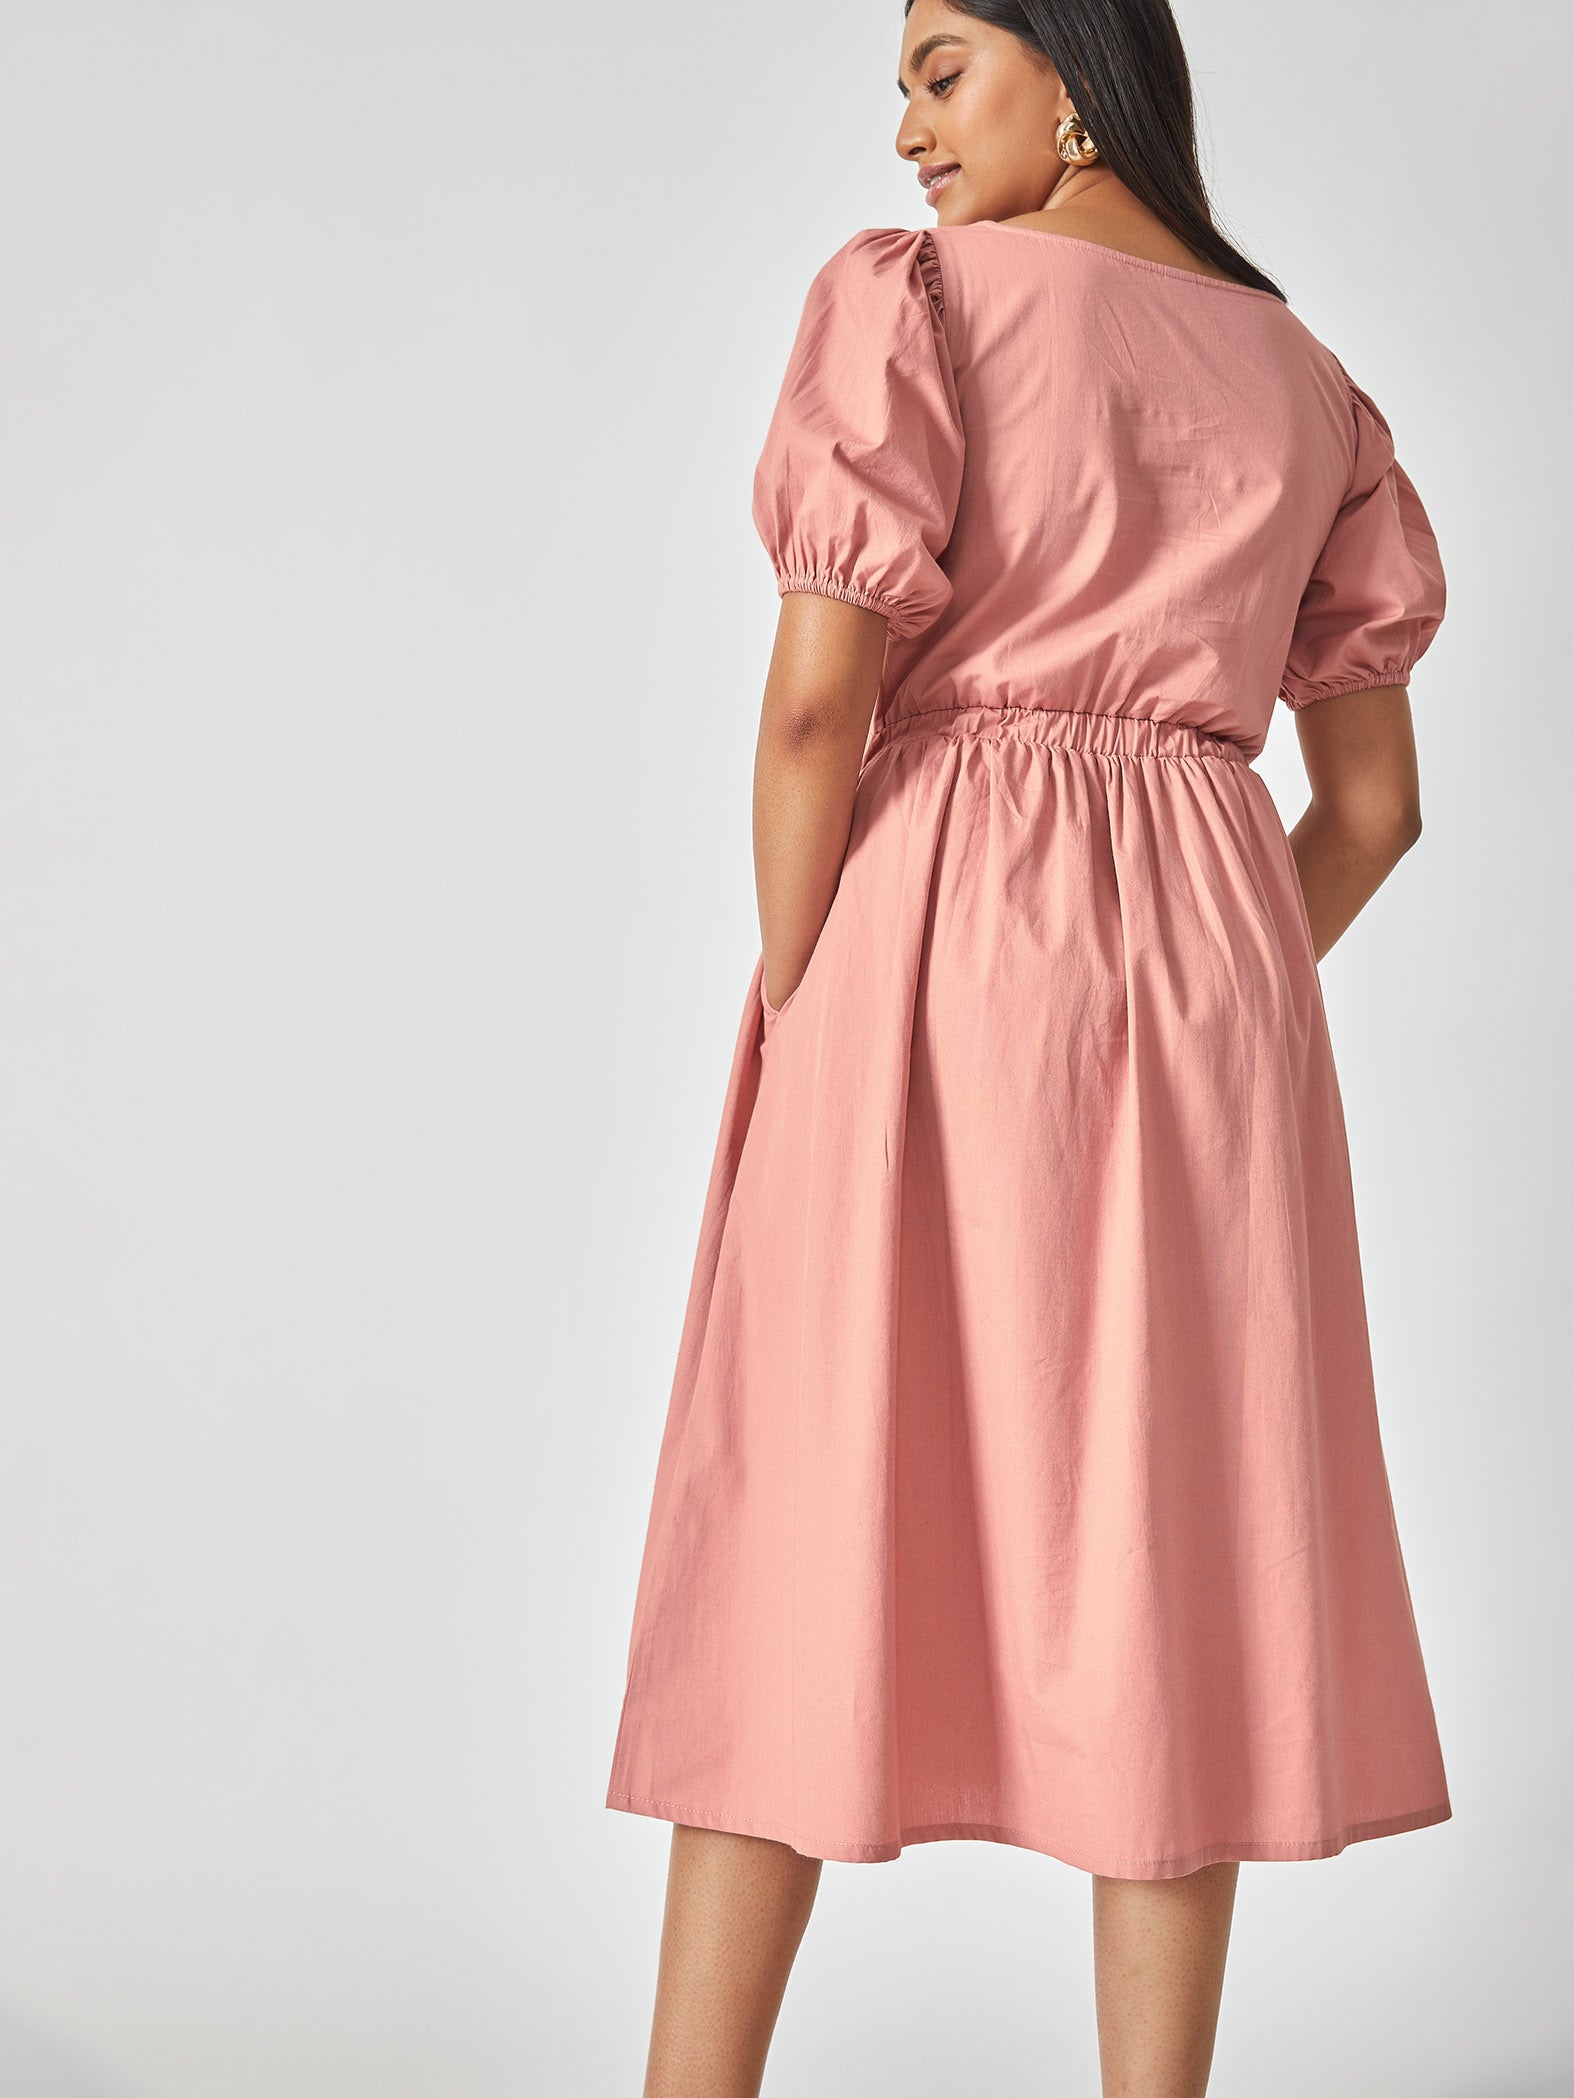 Blush Puff Sleeve Cinched Dress